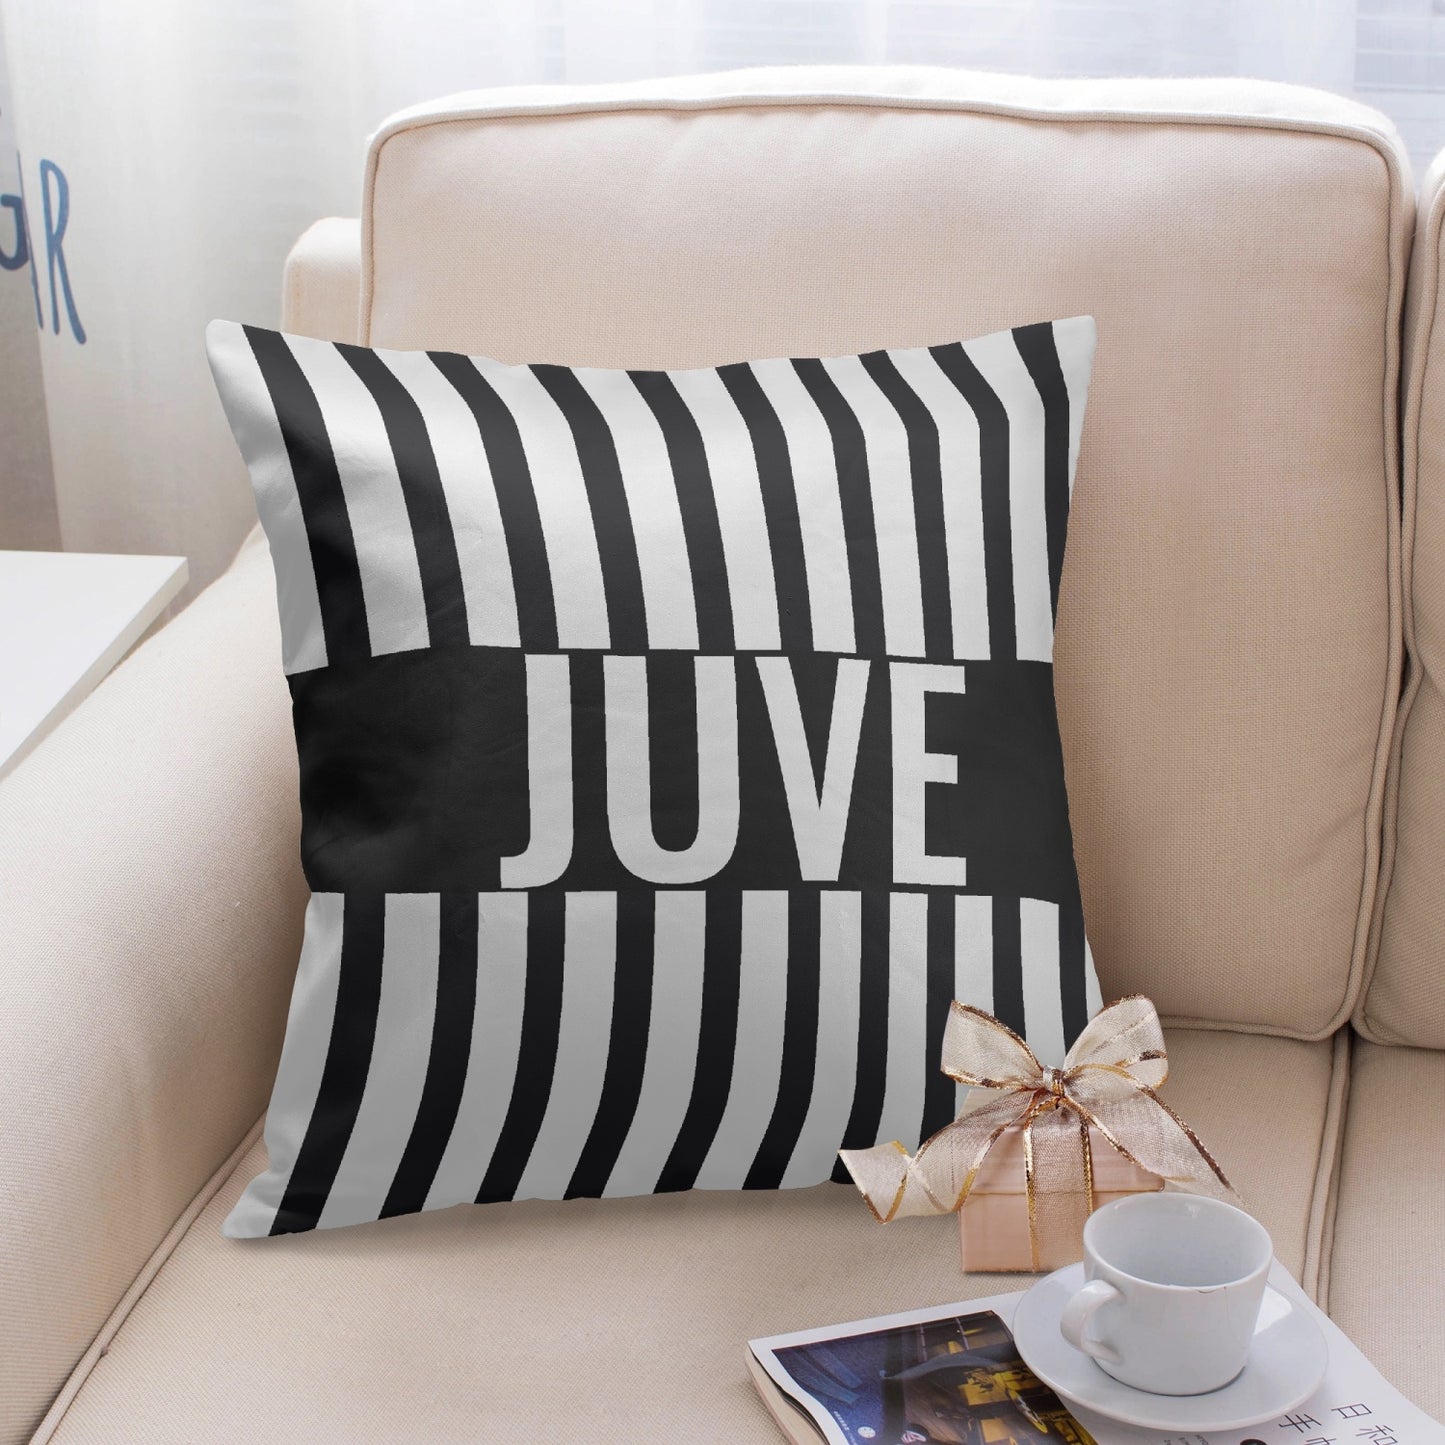 Juve Pillow Cover